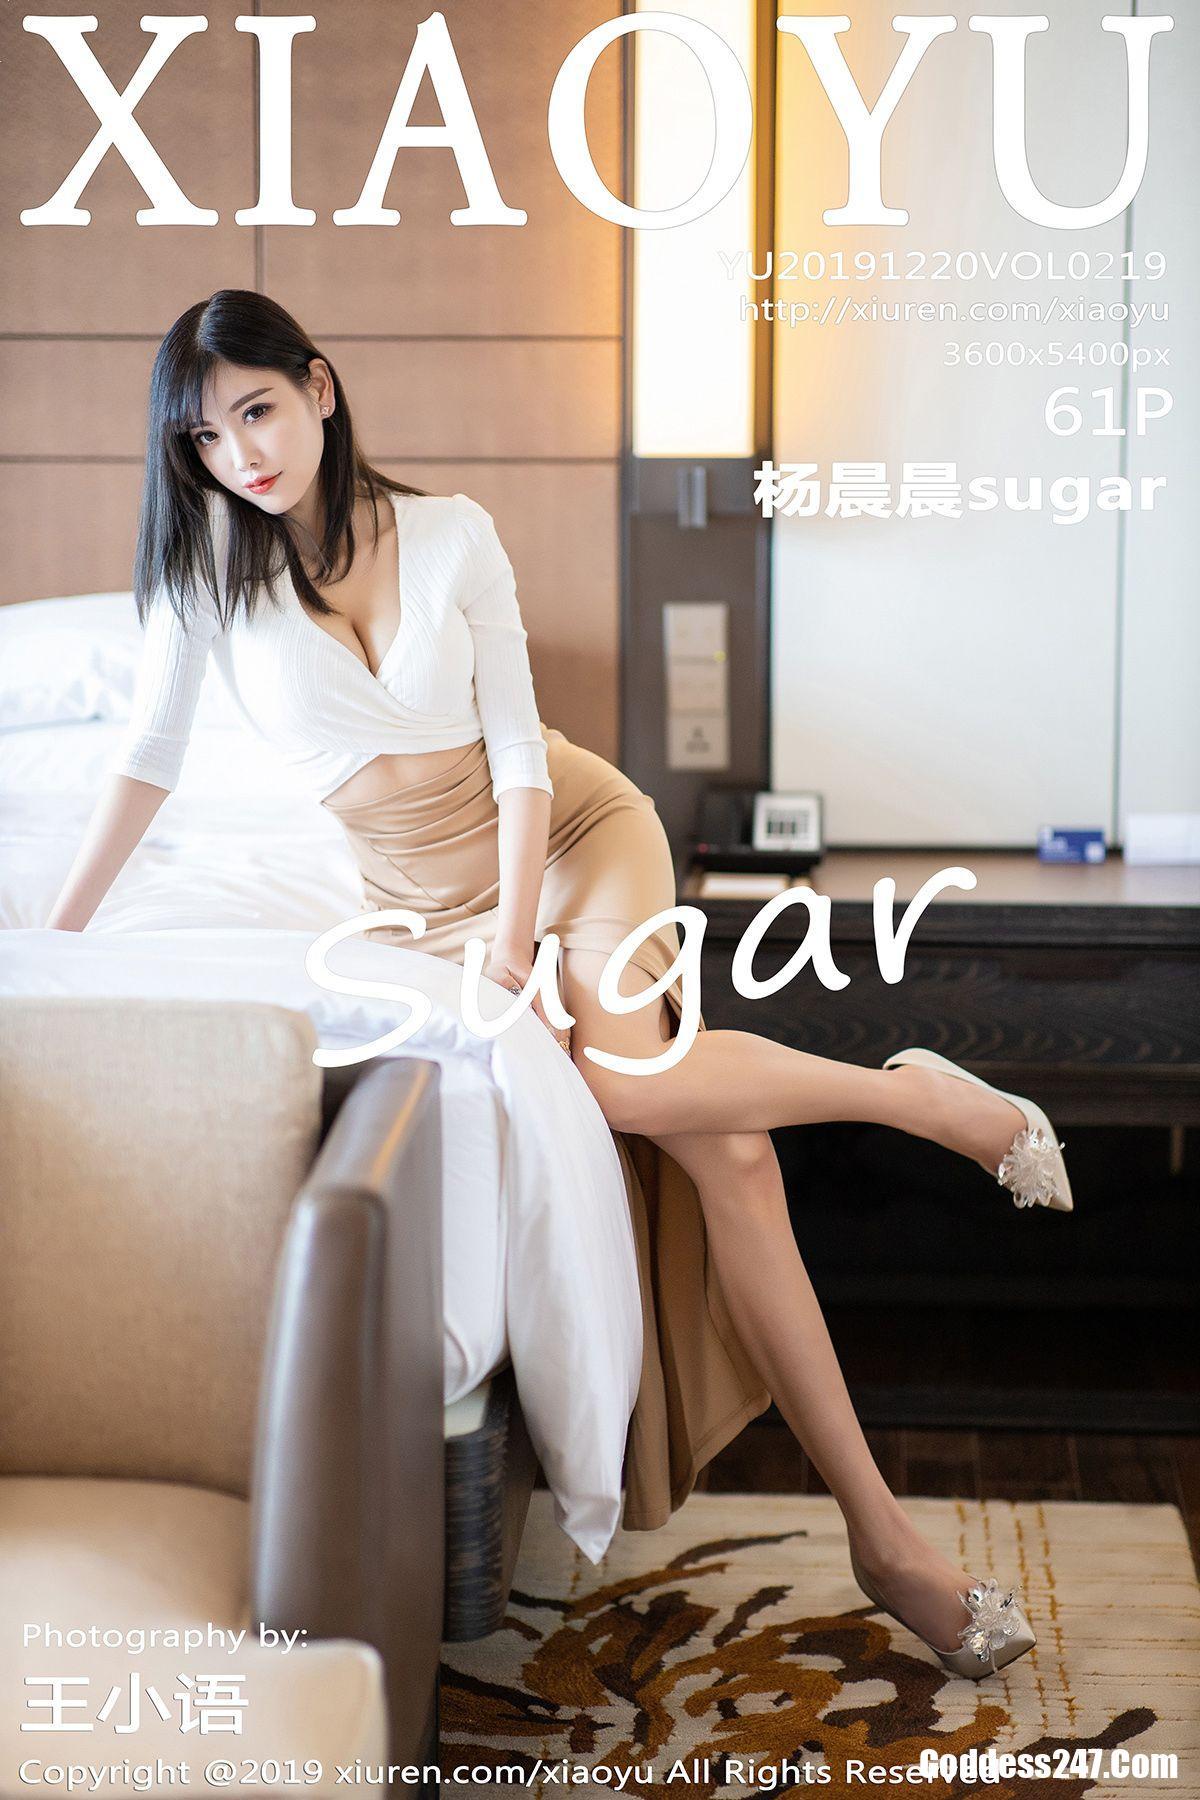 XiaoYu Vol.219 杨晨晨sugar 1